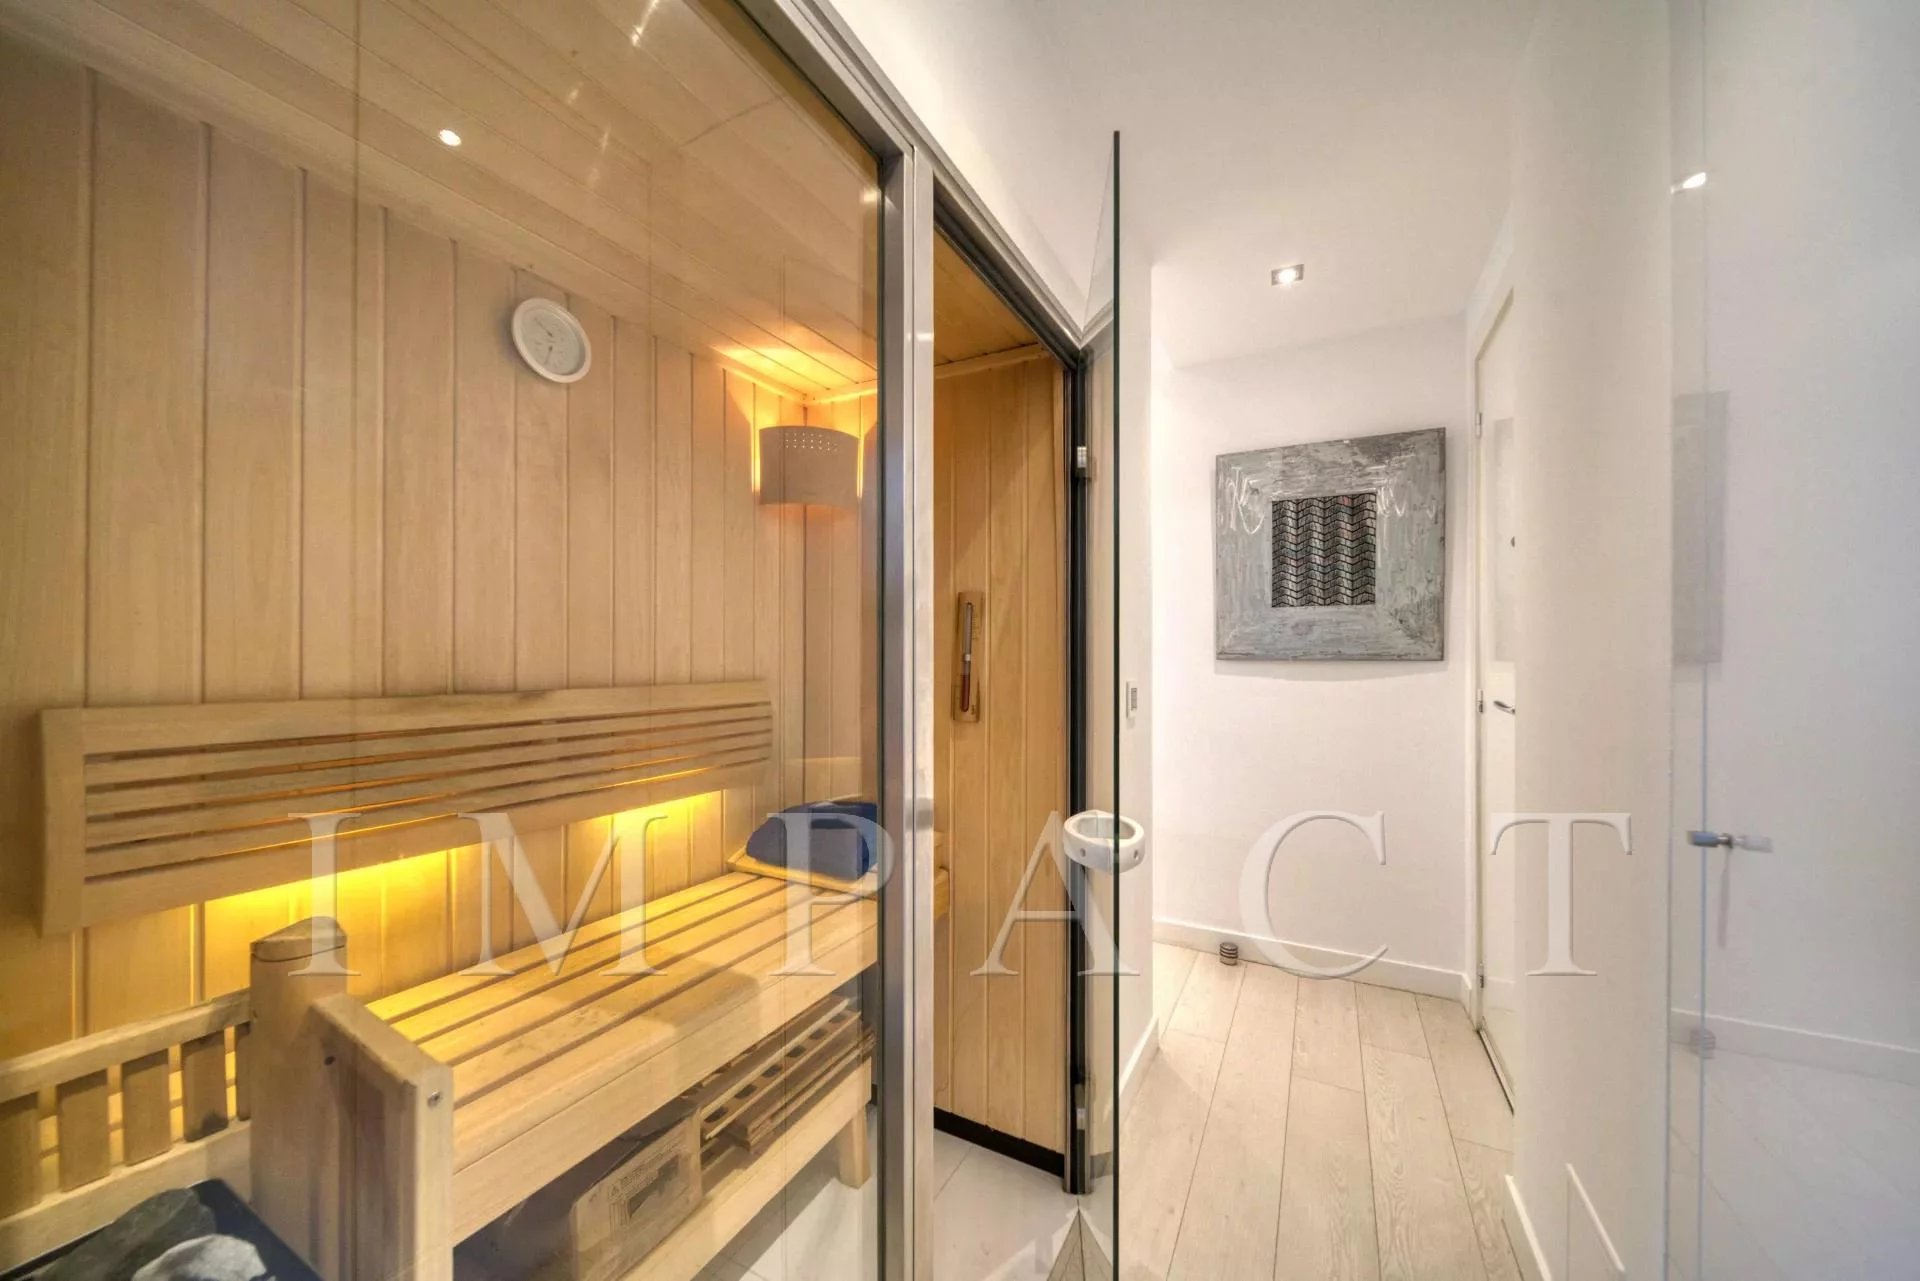 Cannes Croisette apartment for Rent sea view